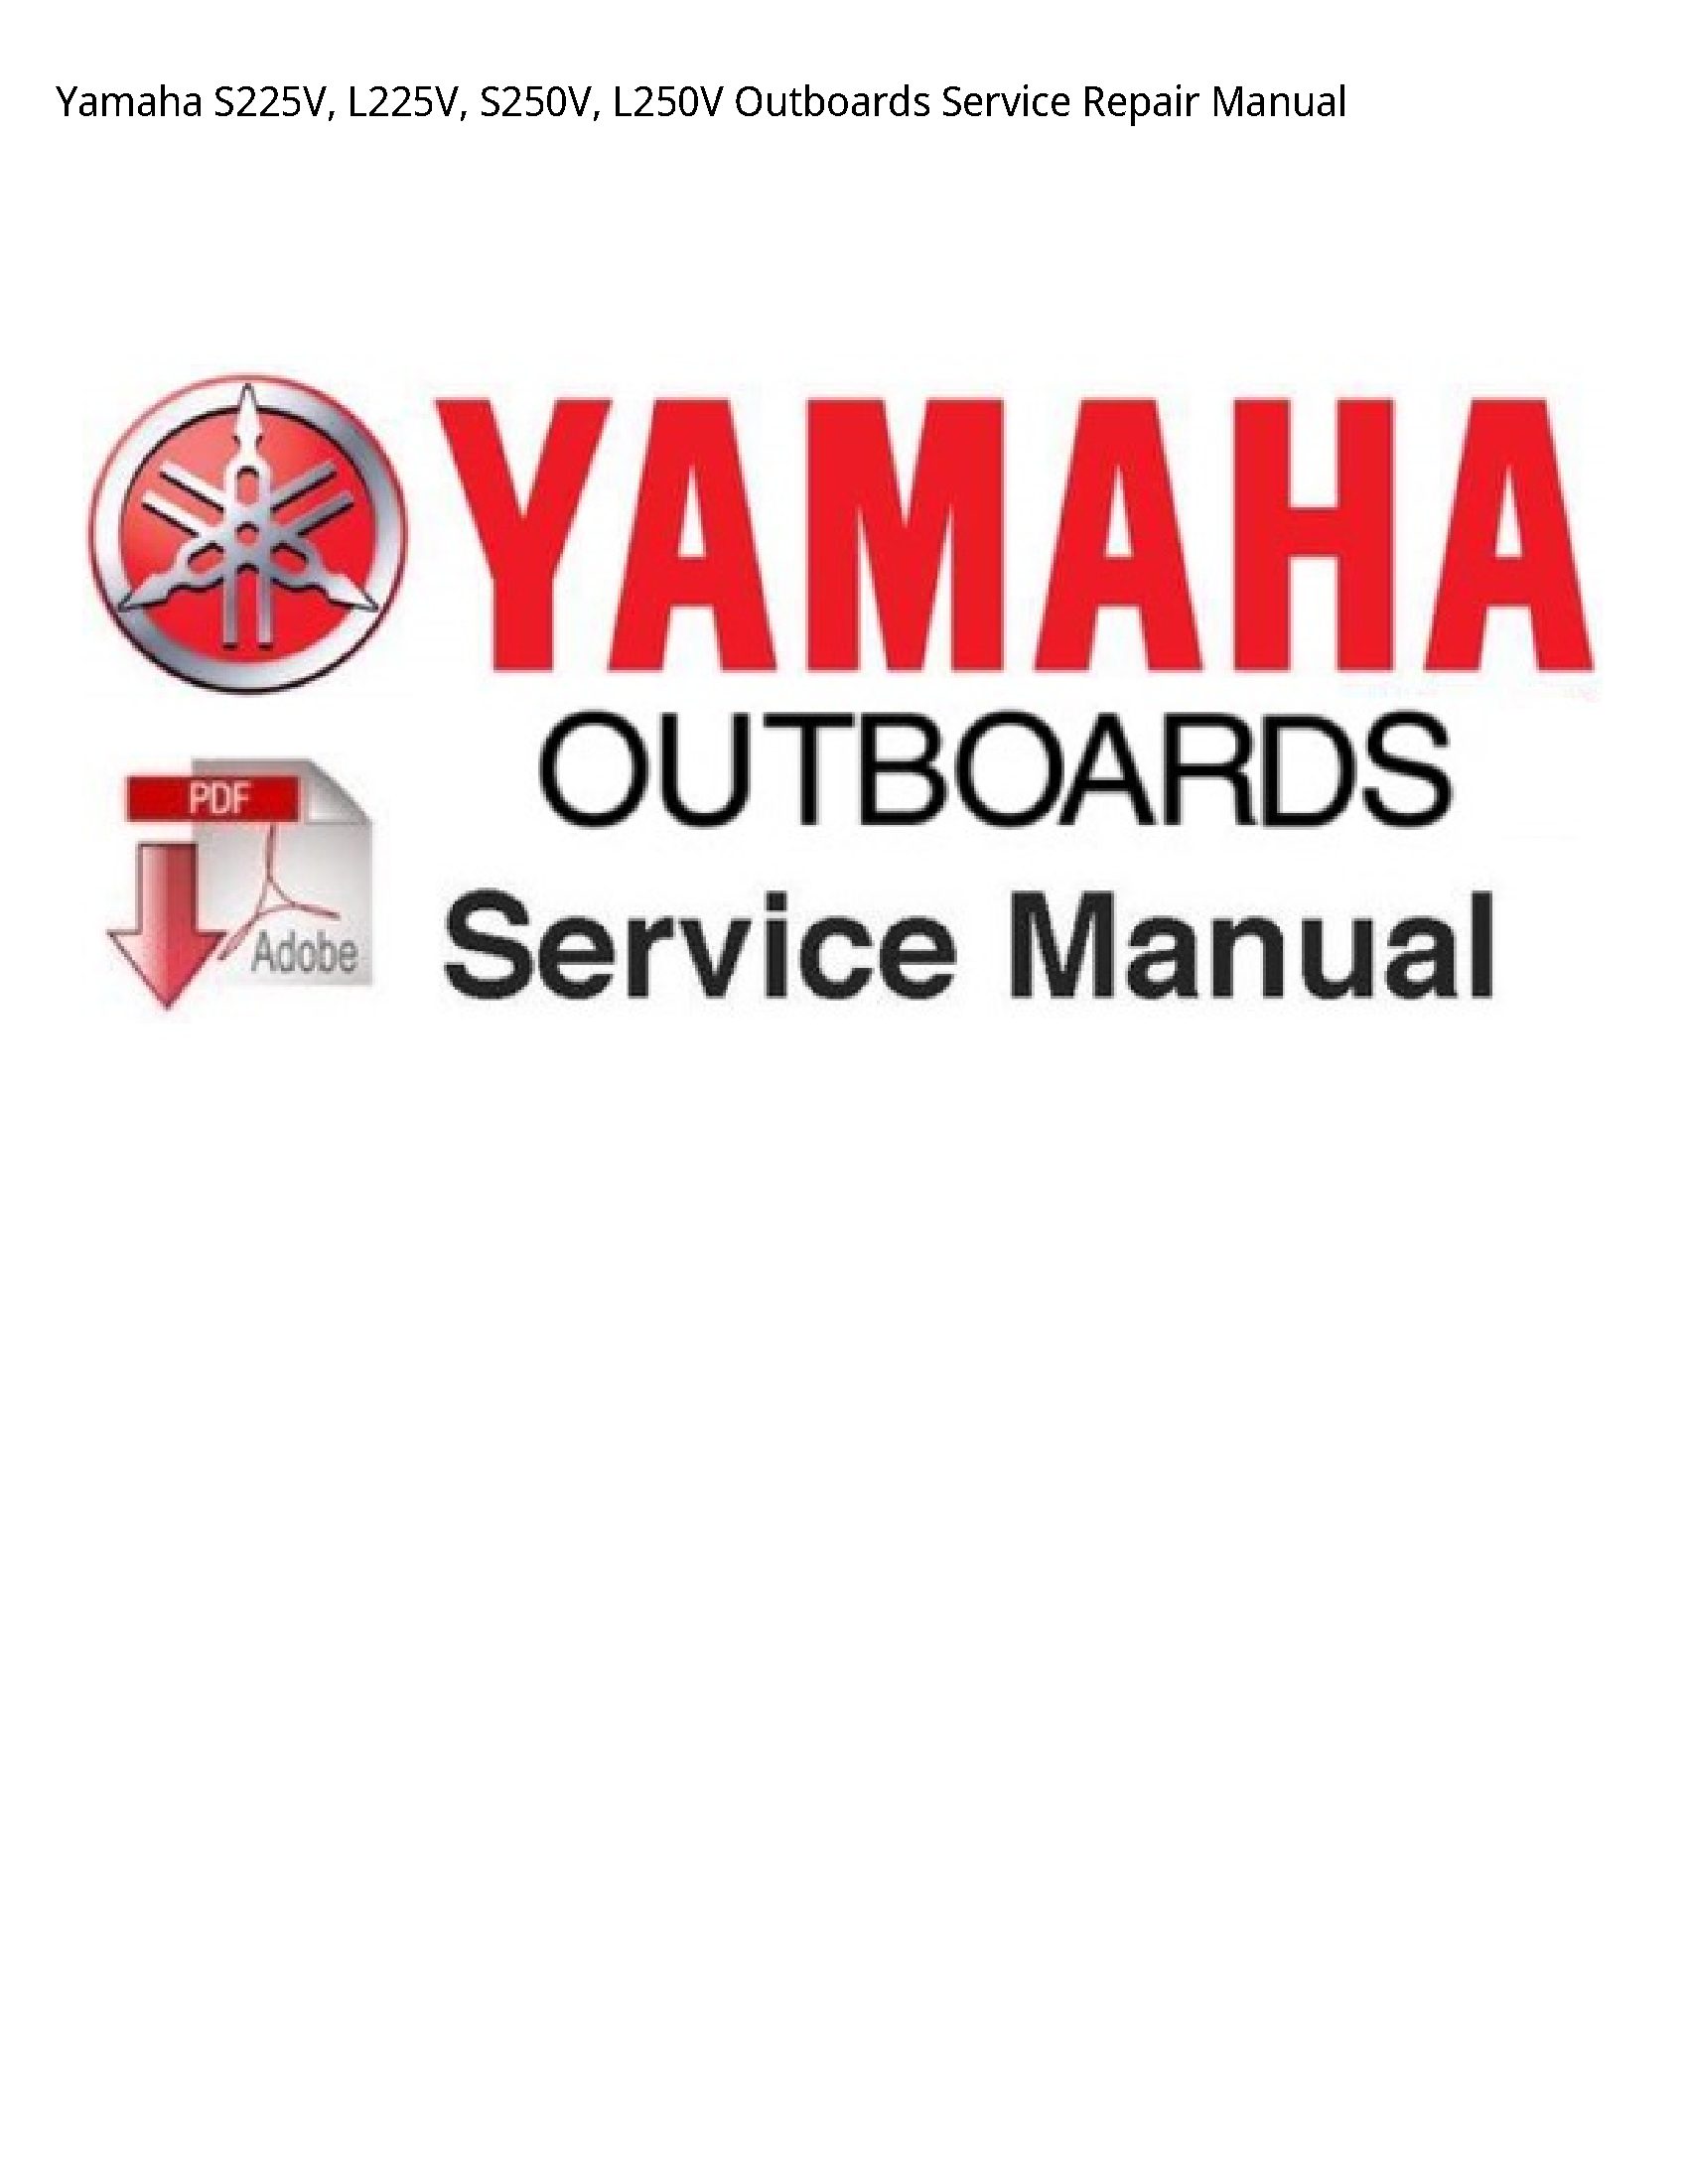 Yamaha S225V Outboards manual